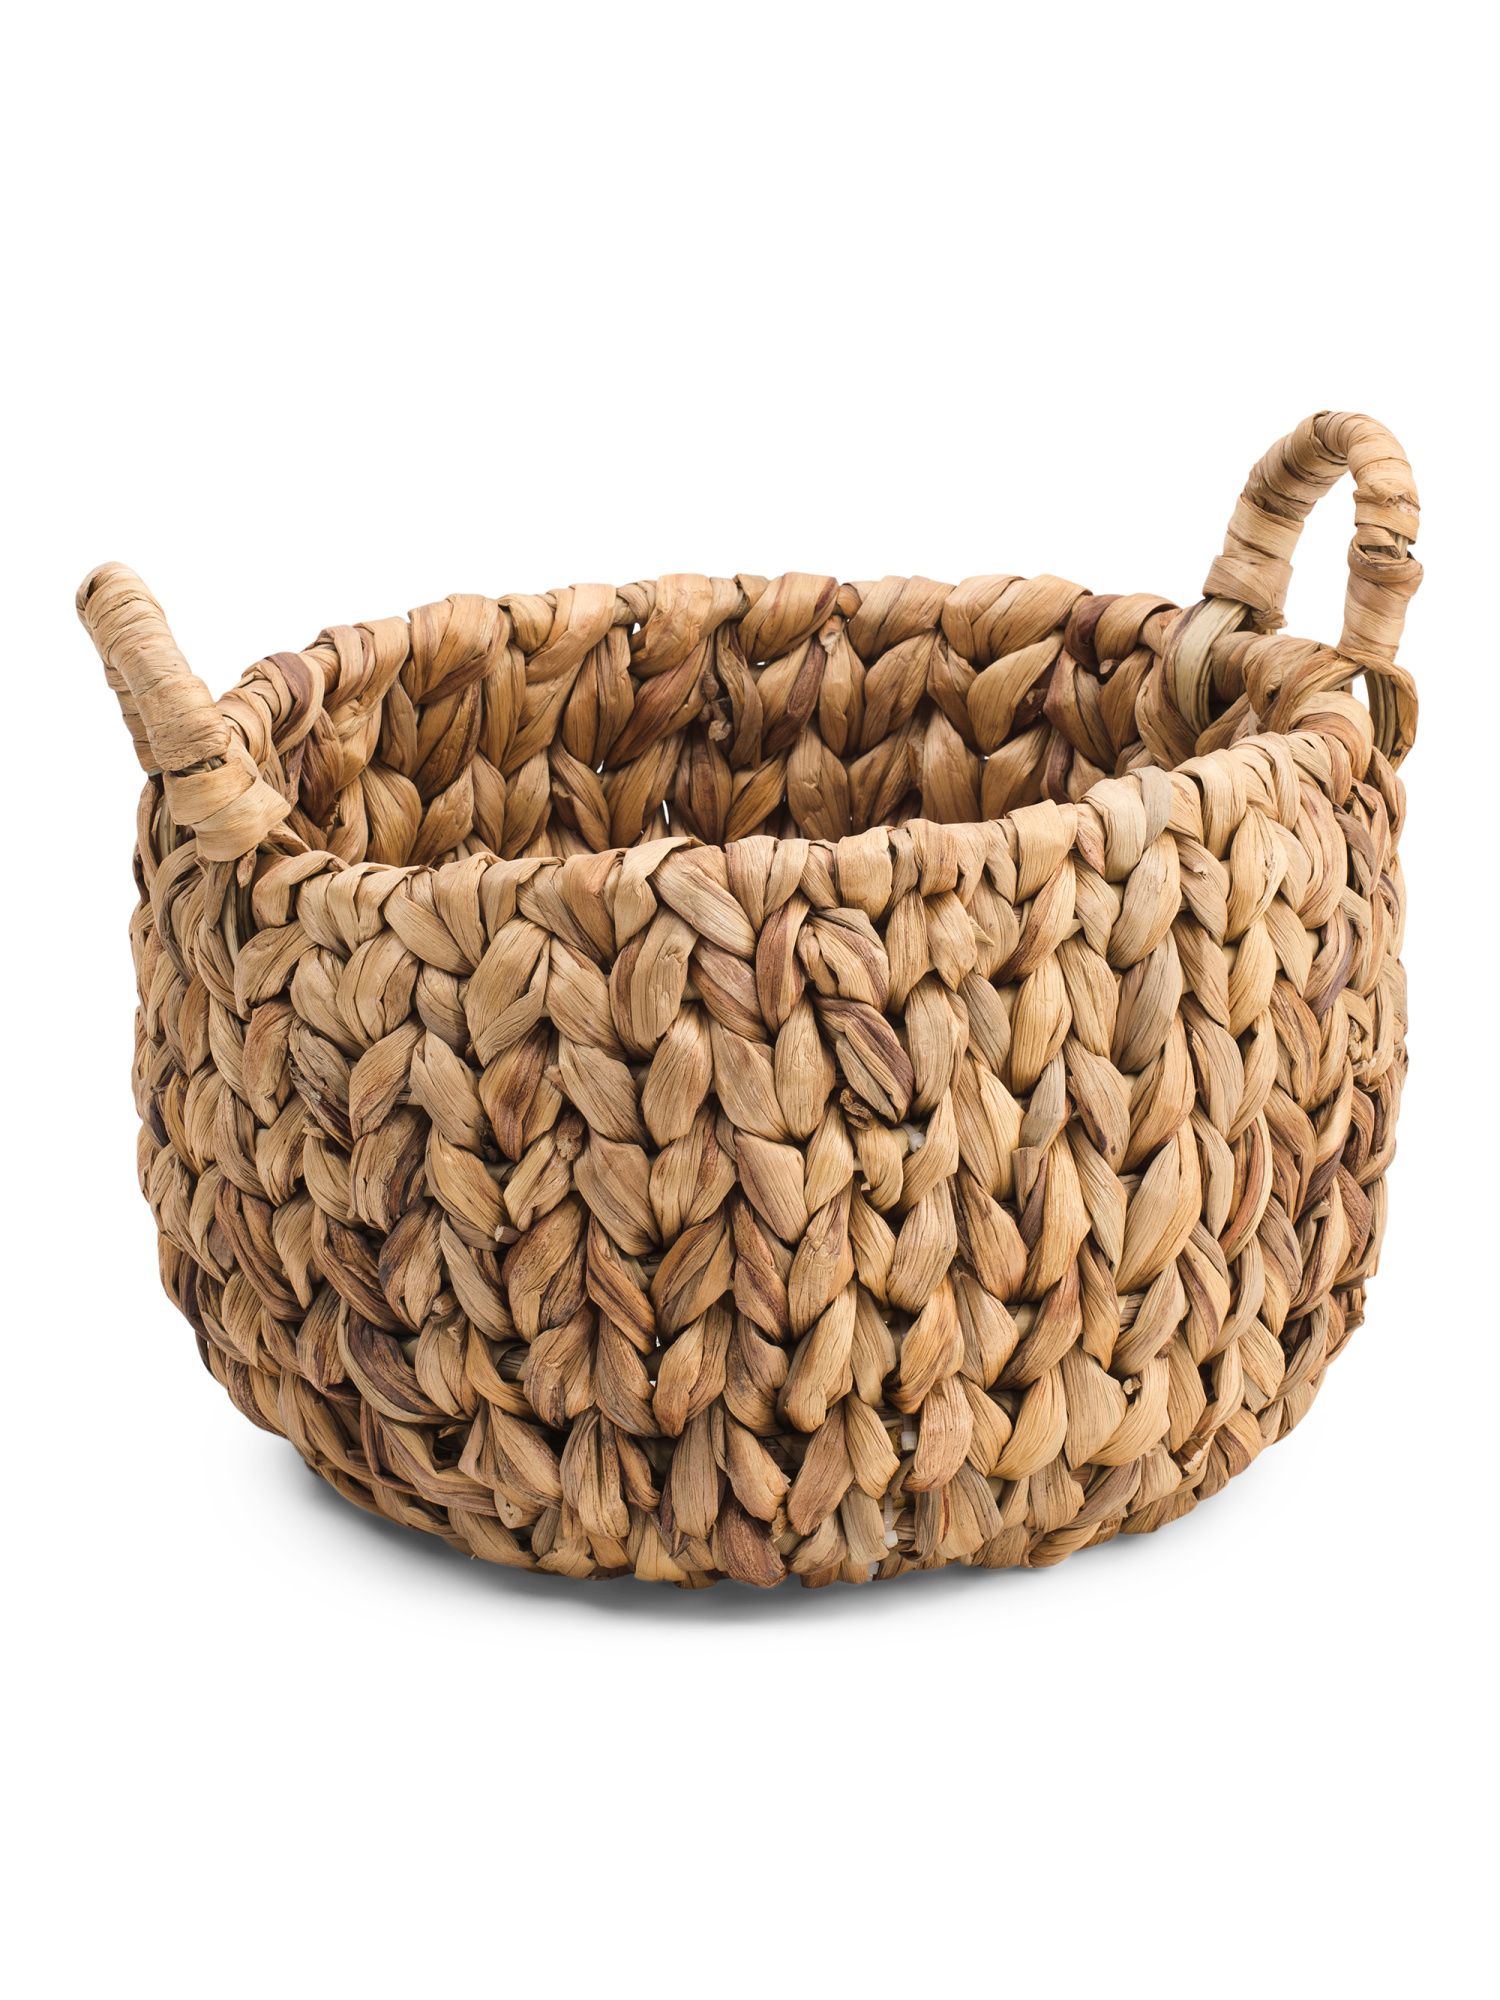 Medium Round Washed Basket | TJ Maxx